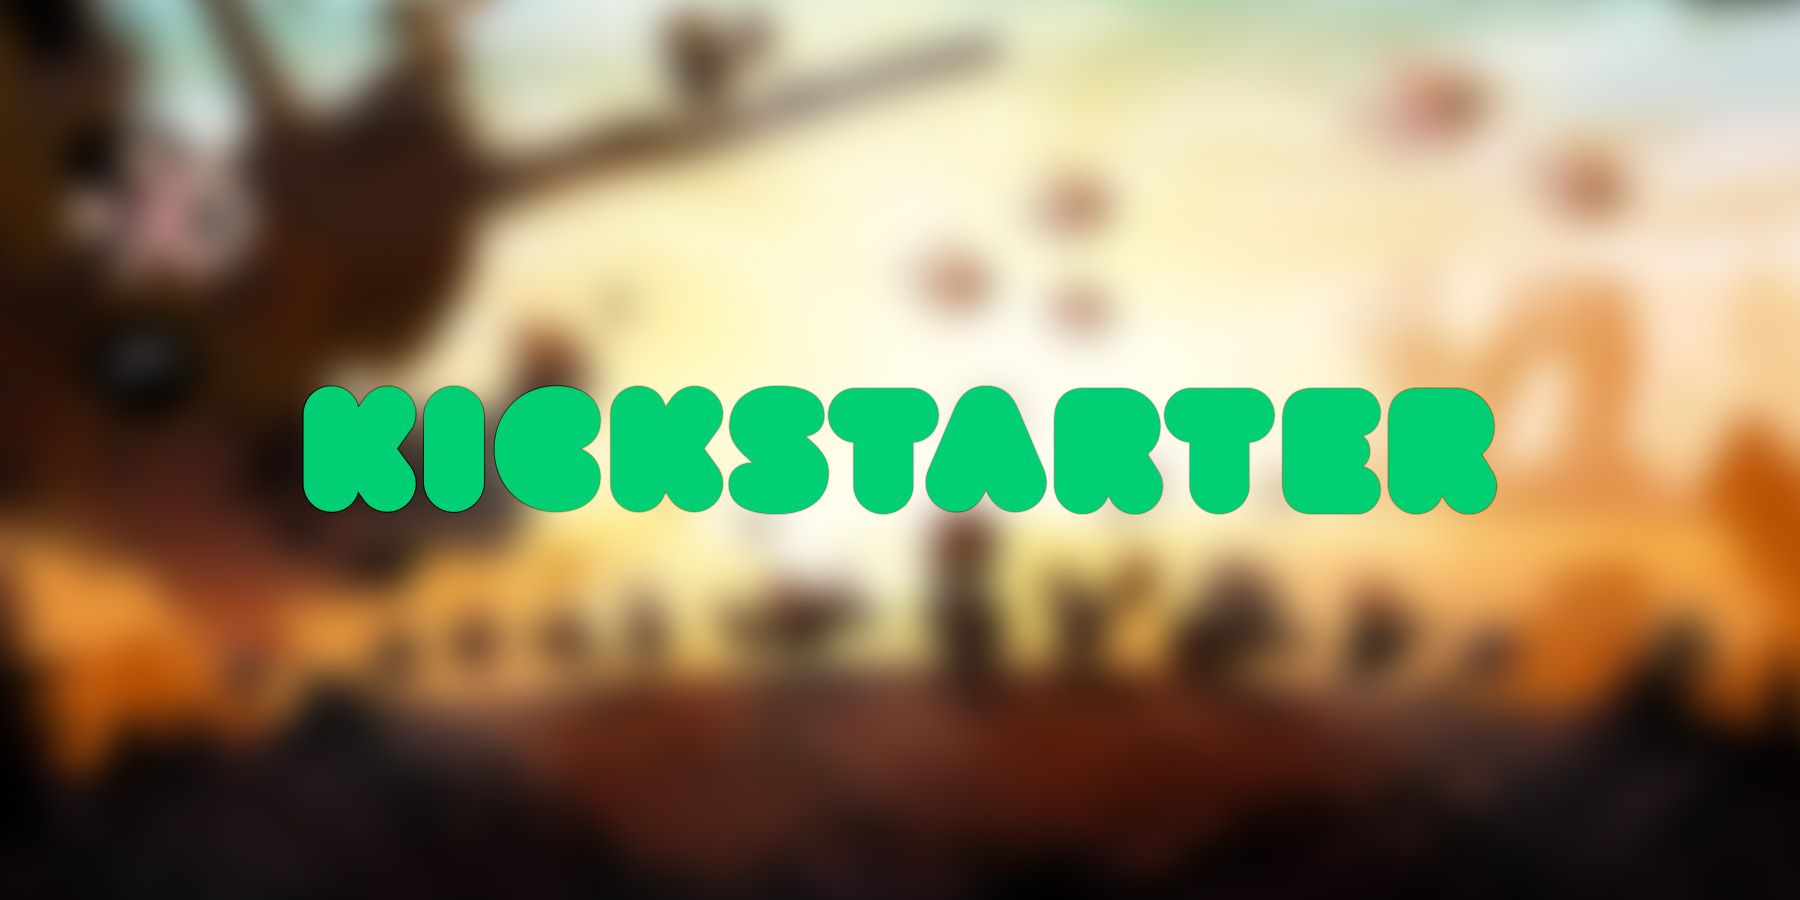 new-game-hits-kickstarter-funding-goal-almost-immediately-ratatan